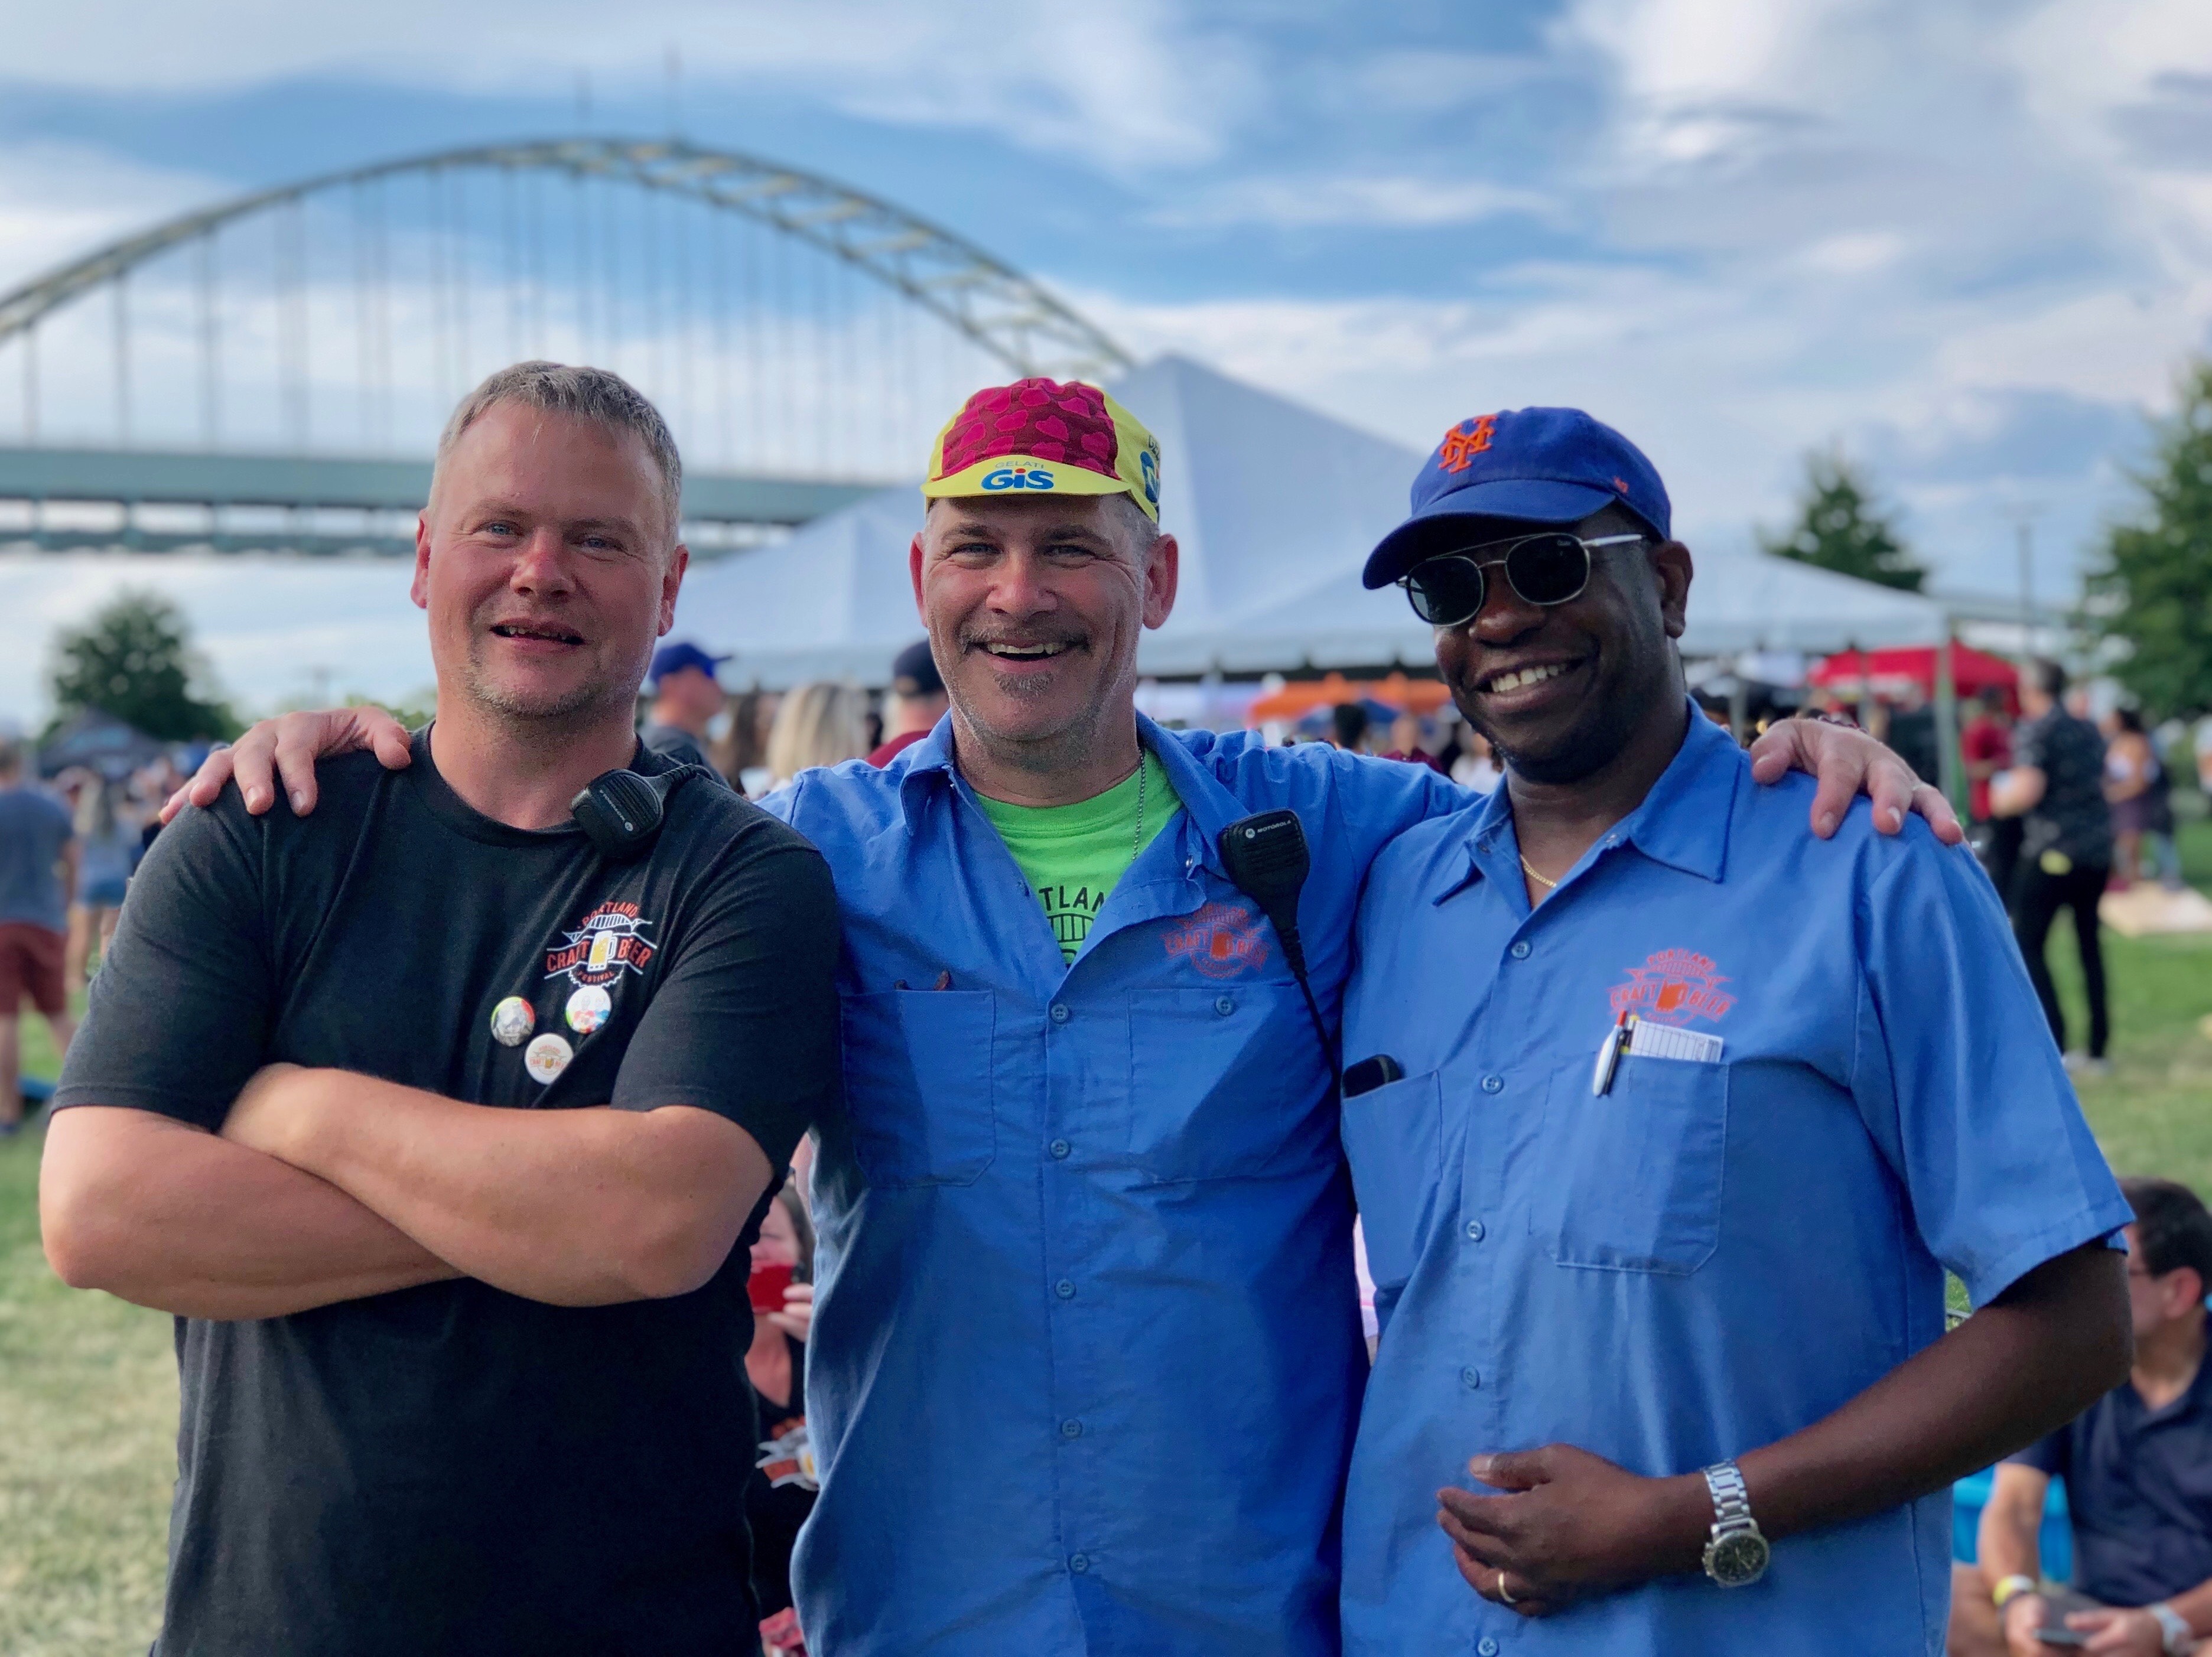 Co-founders of the Portland Craft Beer Festival - Chris Rhodes, Joseph Sundberg, Rodney Woodley. (photo by Cat Stelzer)